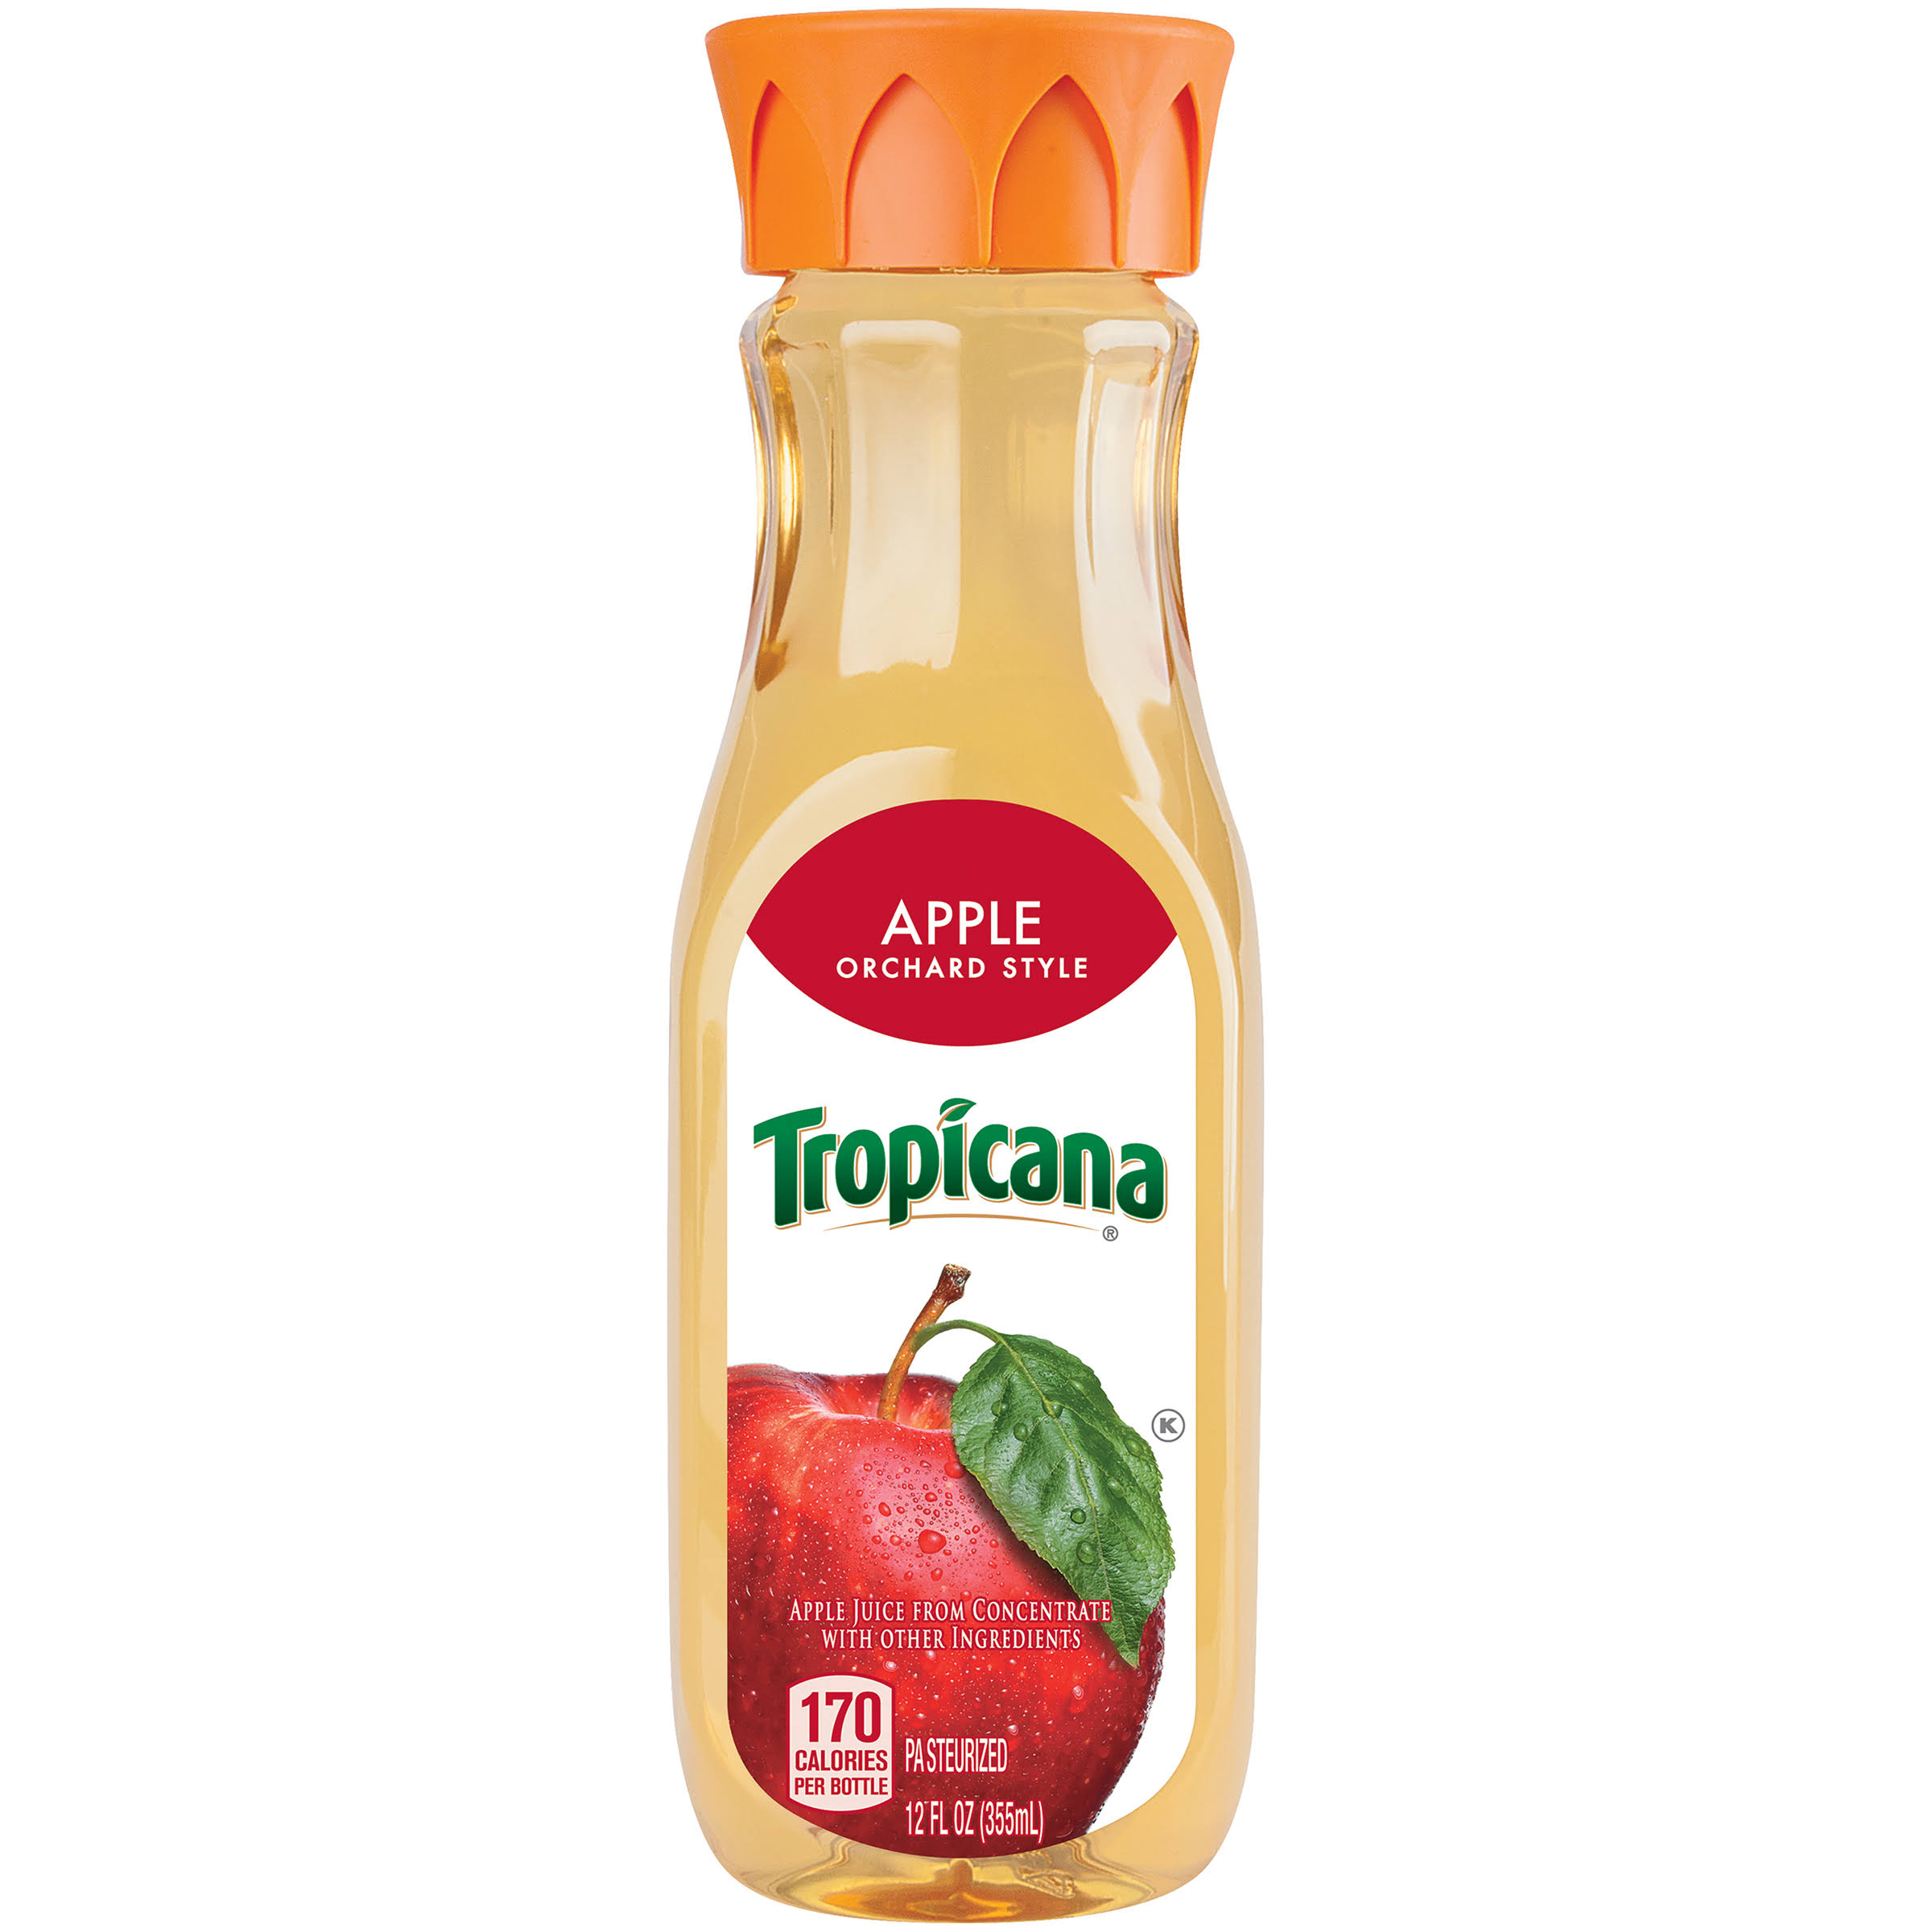 Tropicana Orchard Style Apple Juice - 12oz